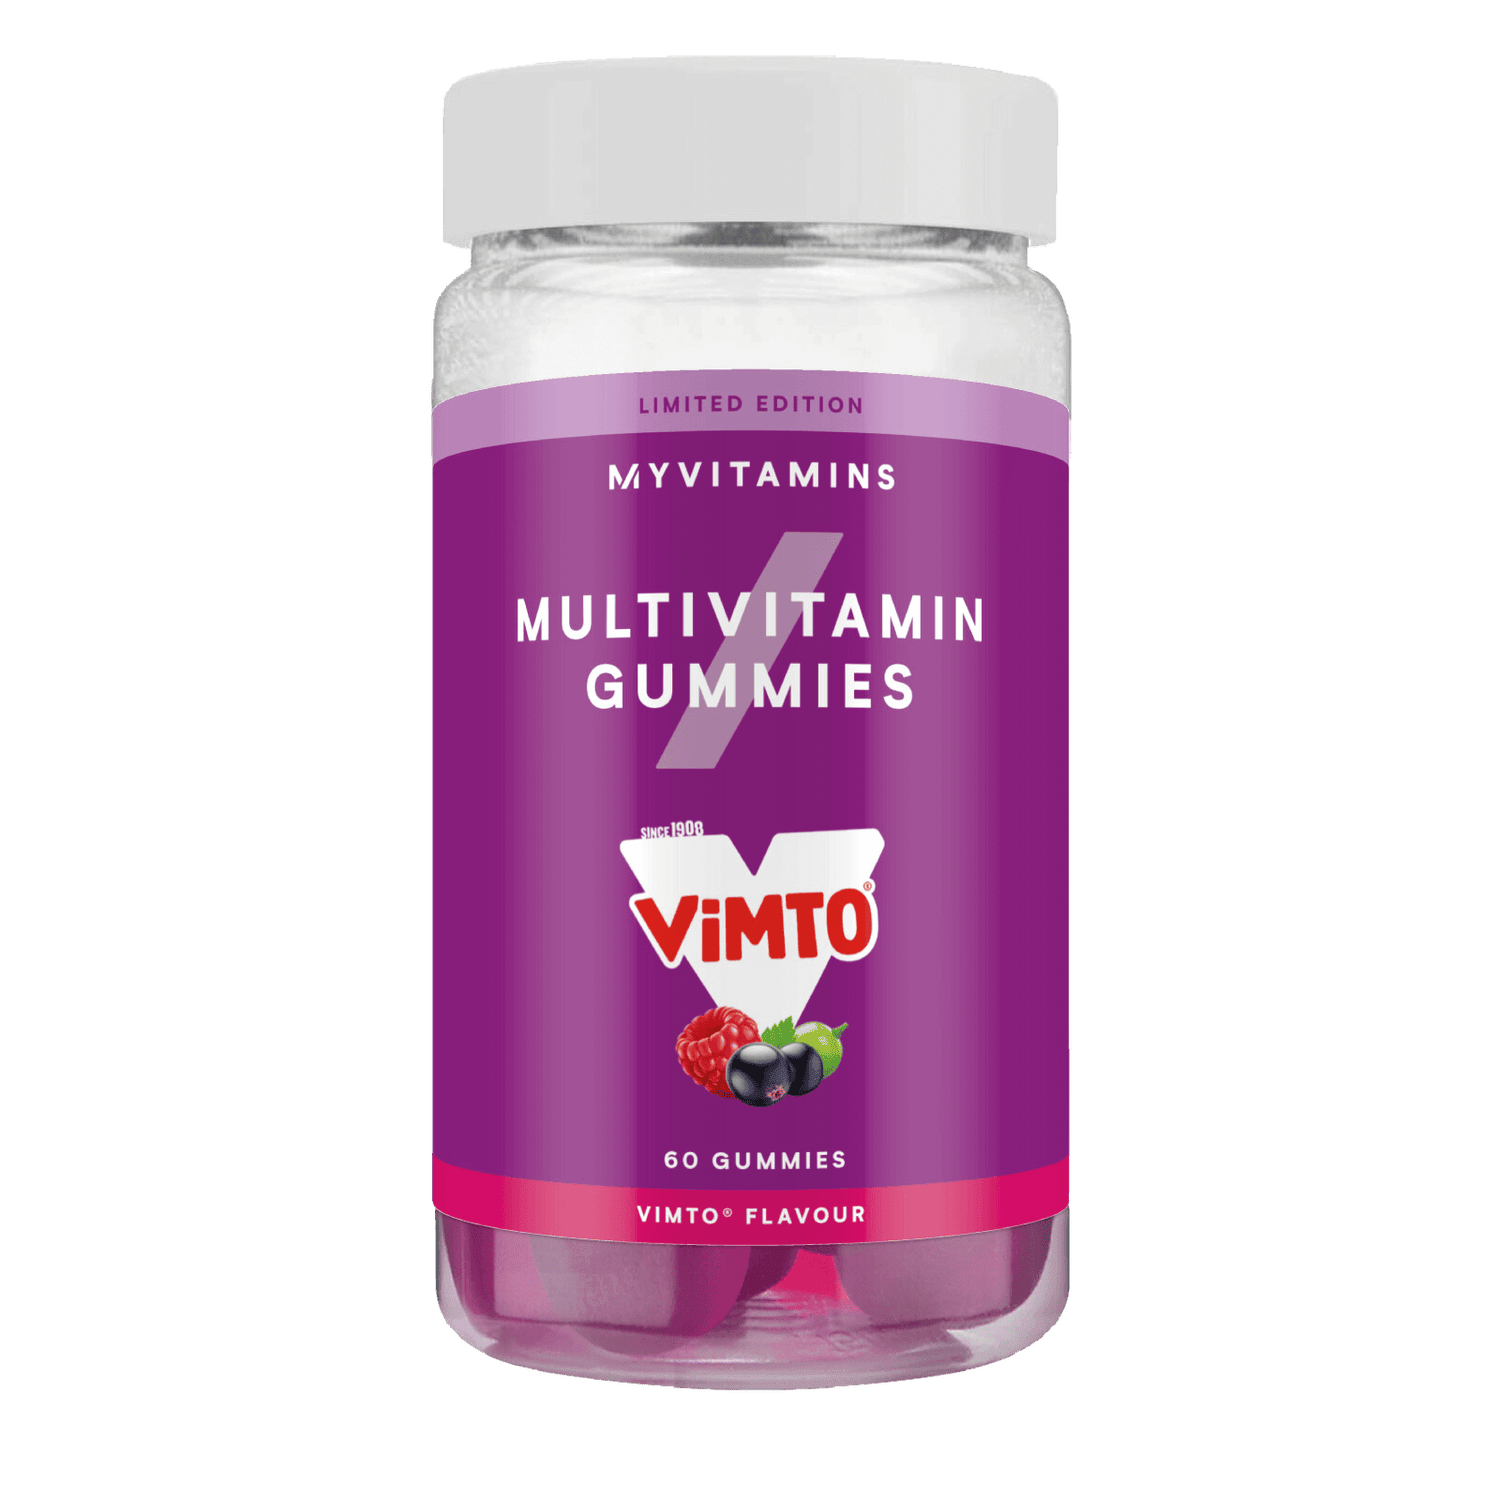 Vimto Multivitamin Gummies